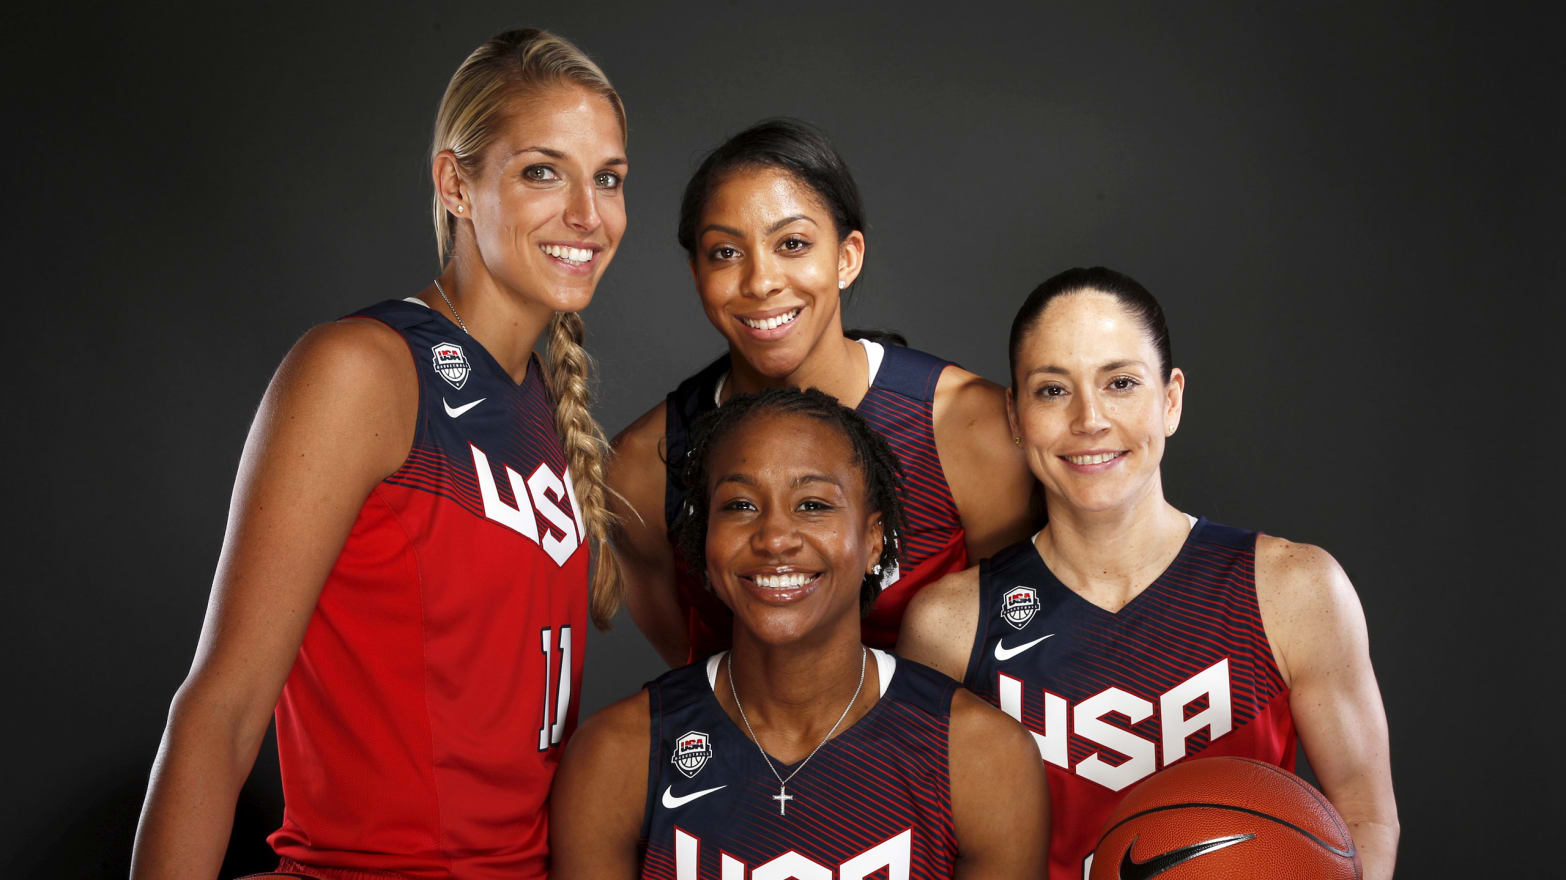 Rio Olympics 2016 How to Watch USA Womens Basketball Live Stream Online